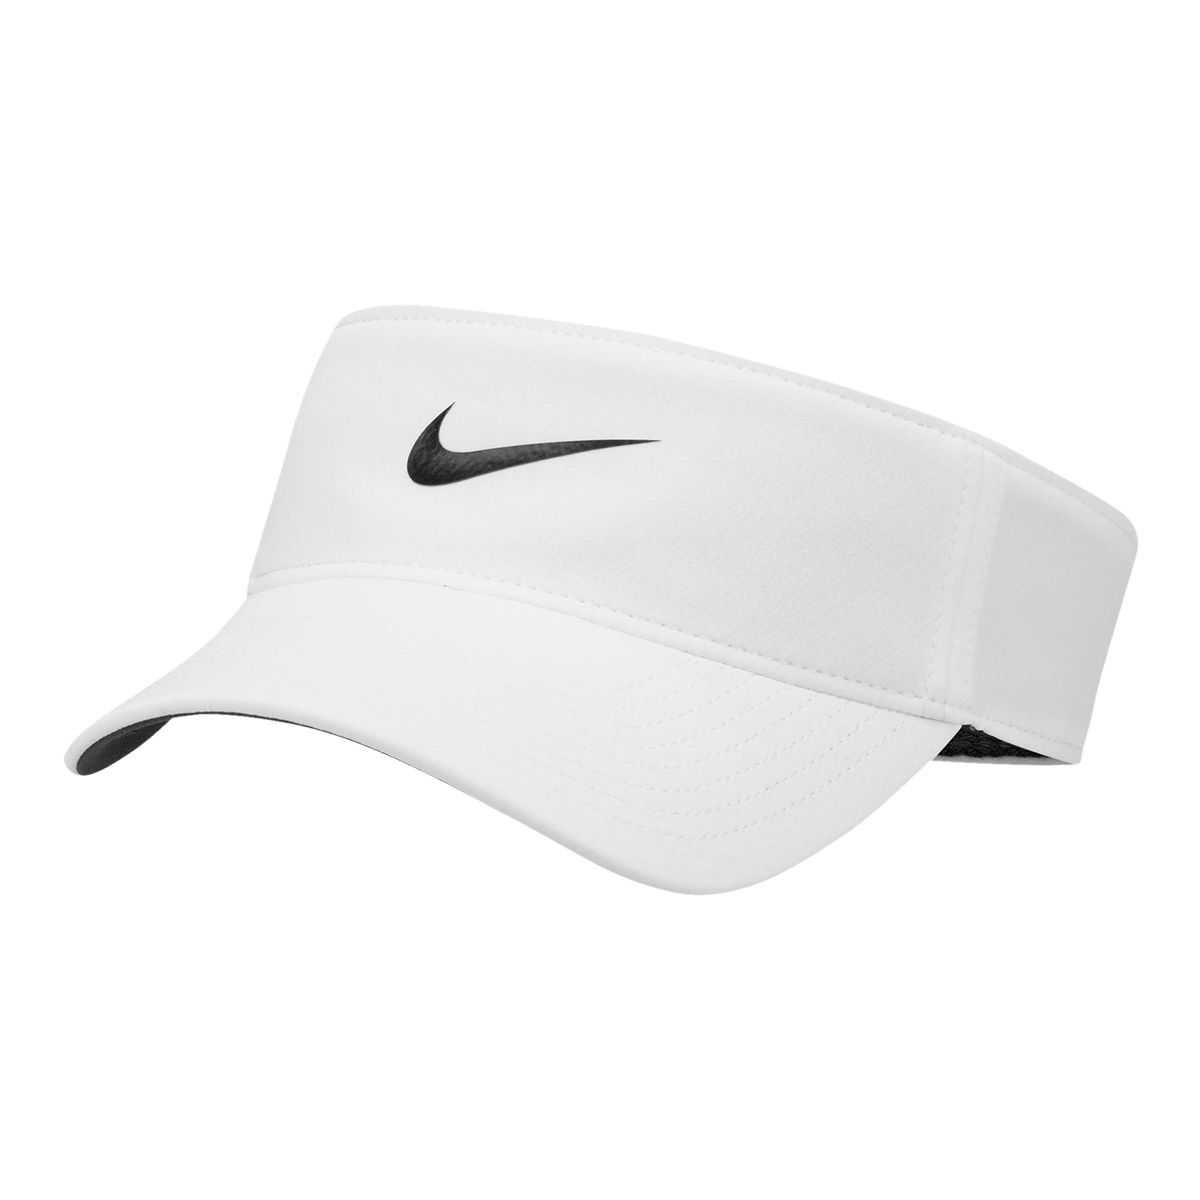 Image of Nike Golf Men's Dri-FIT Ace Visor